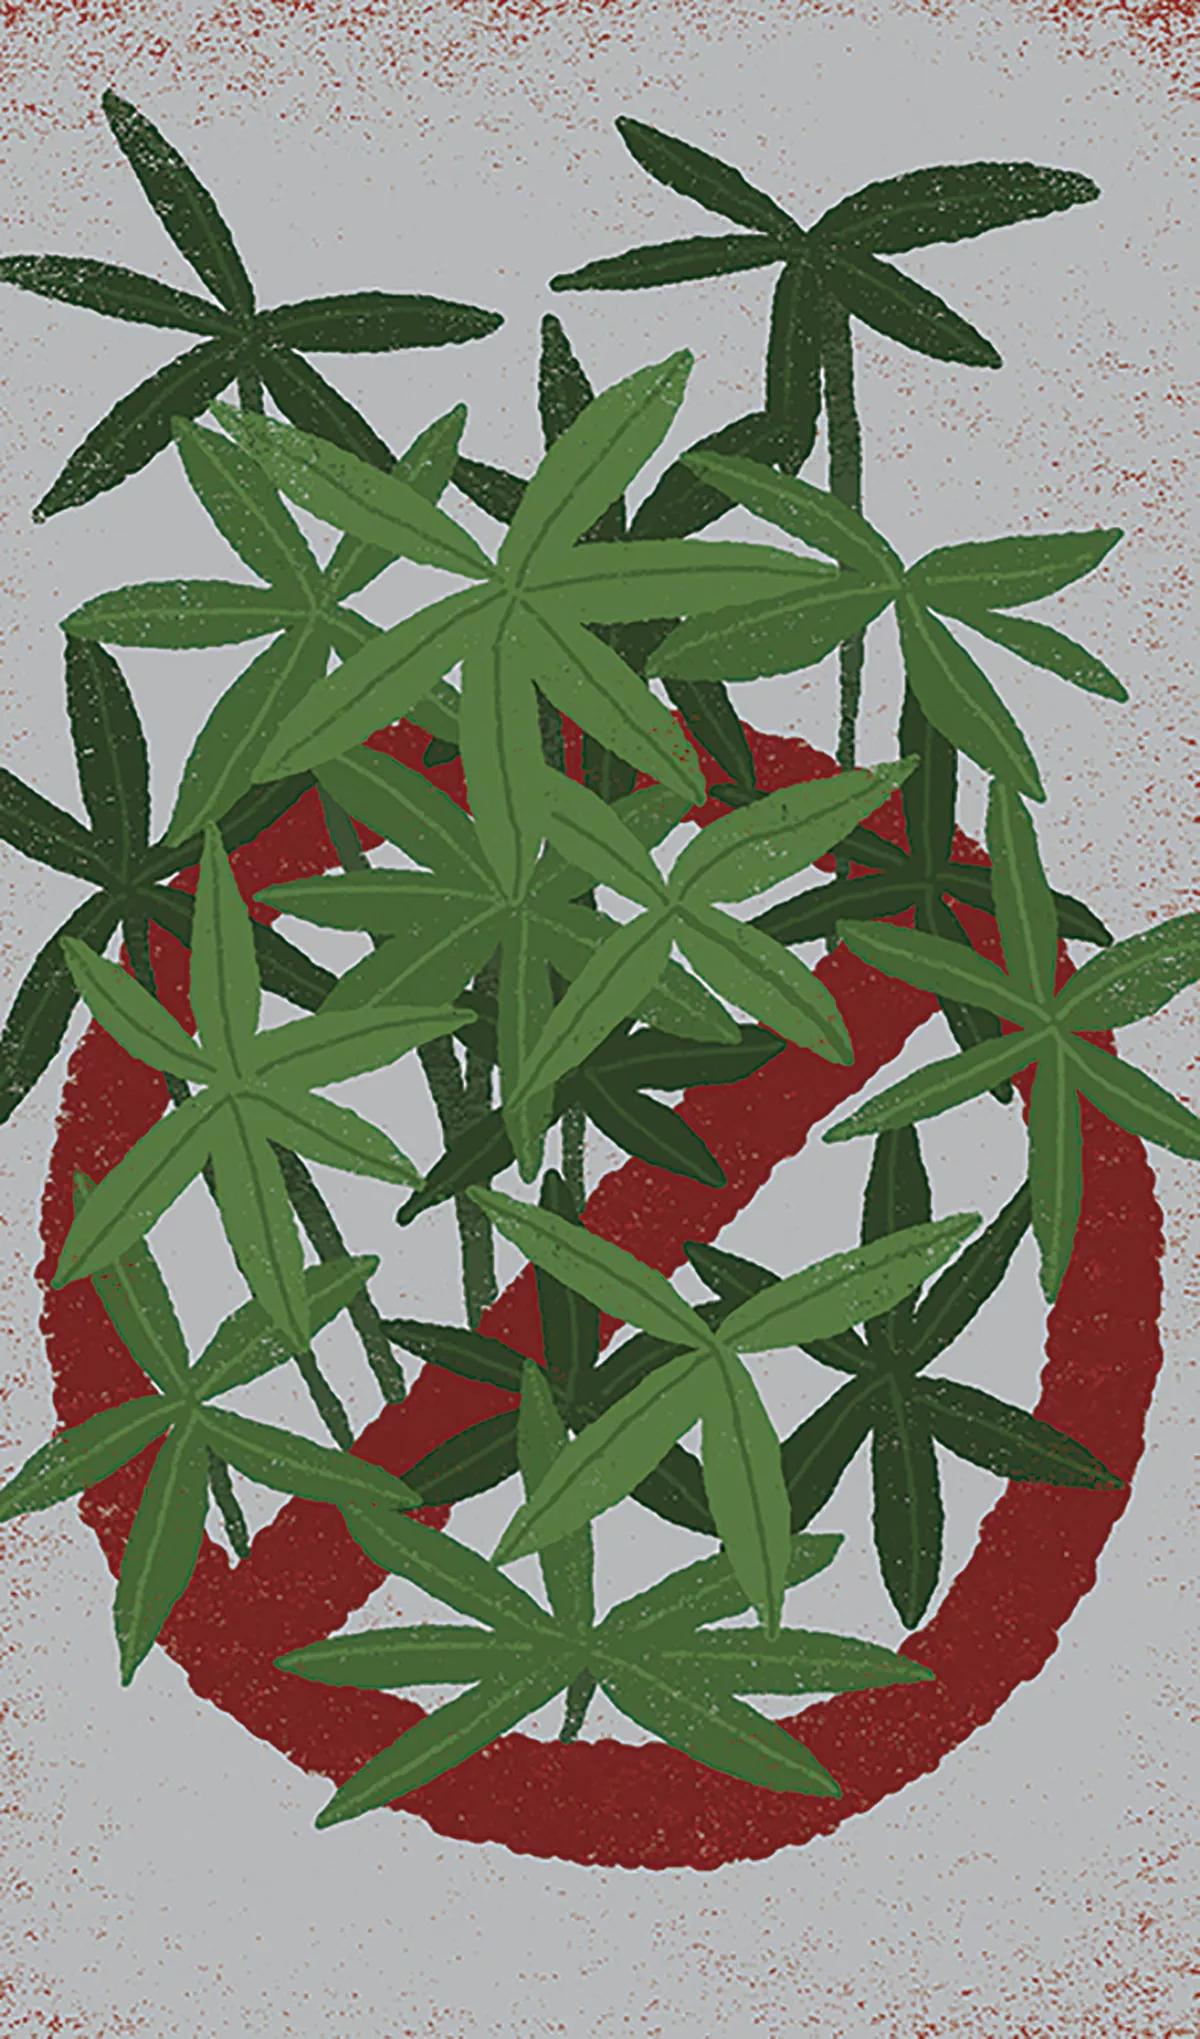 Ilustración: Prohibición cannabis